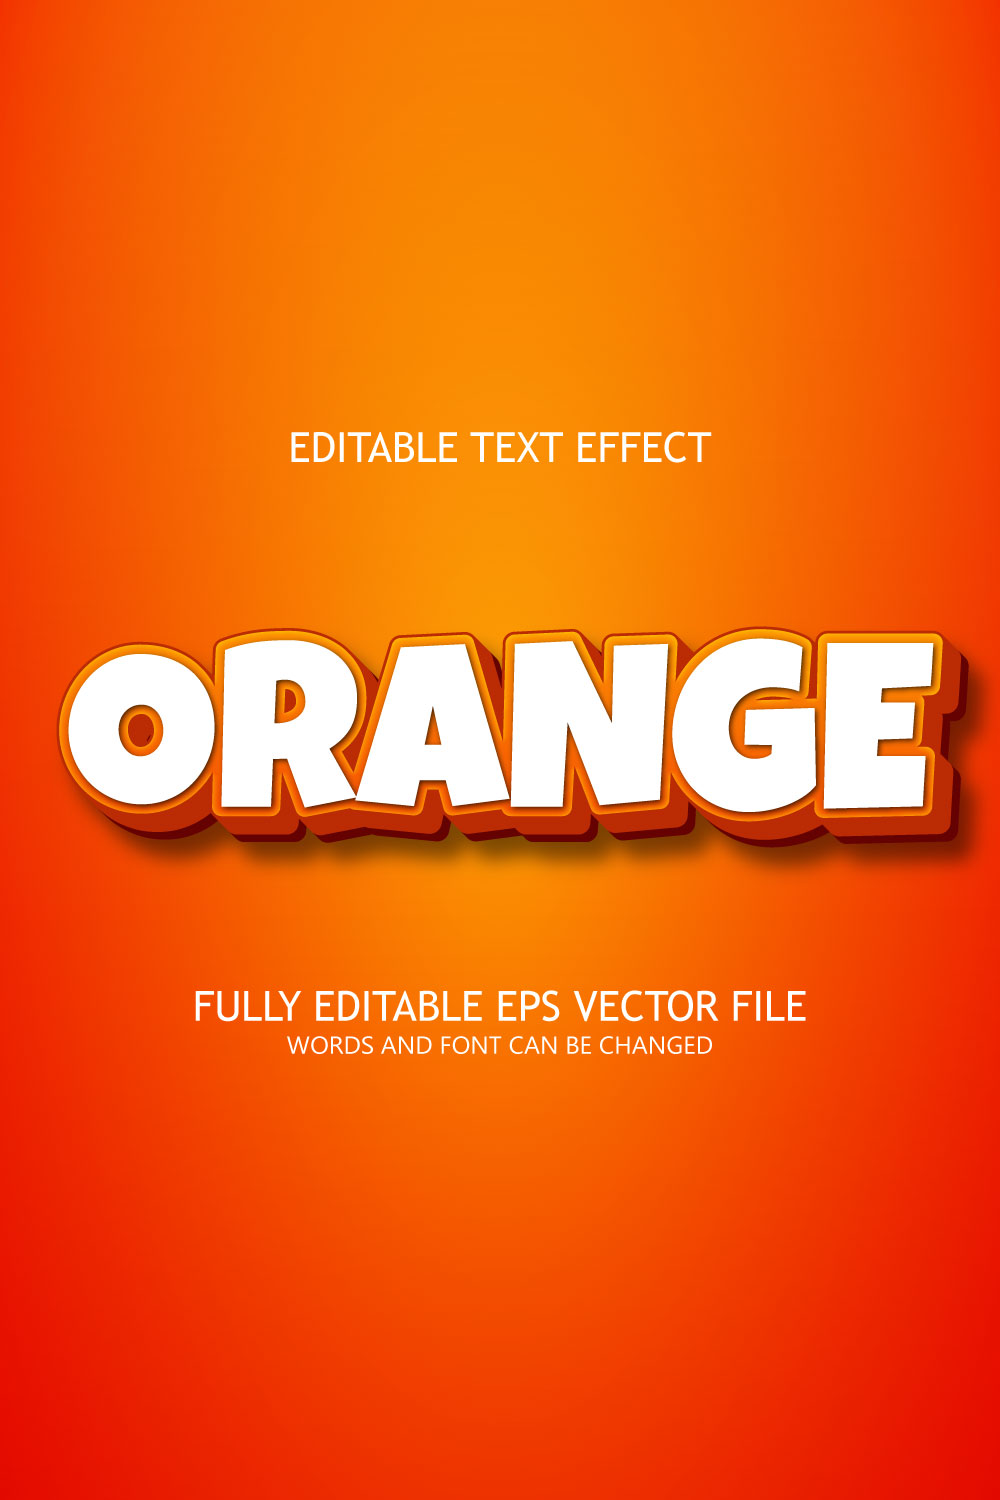 Orange 3d editable text style effect pinterest preview image.